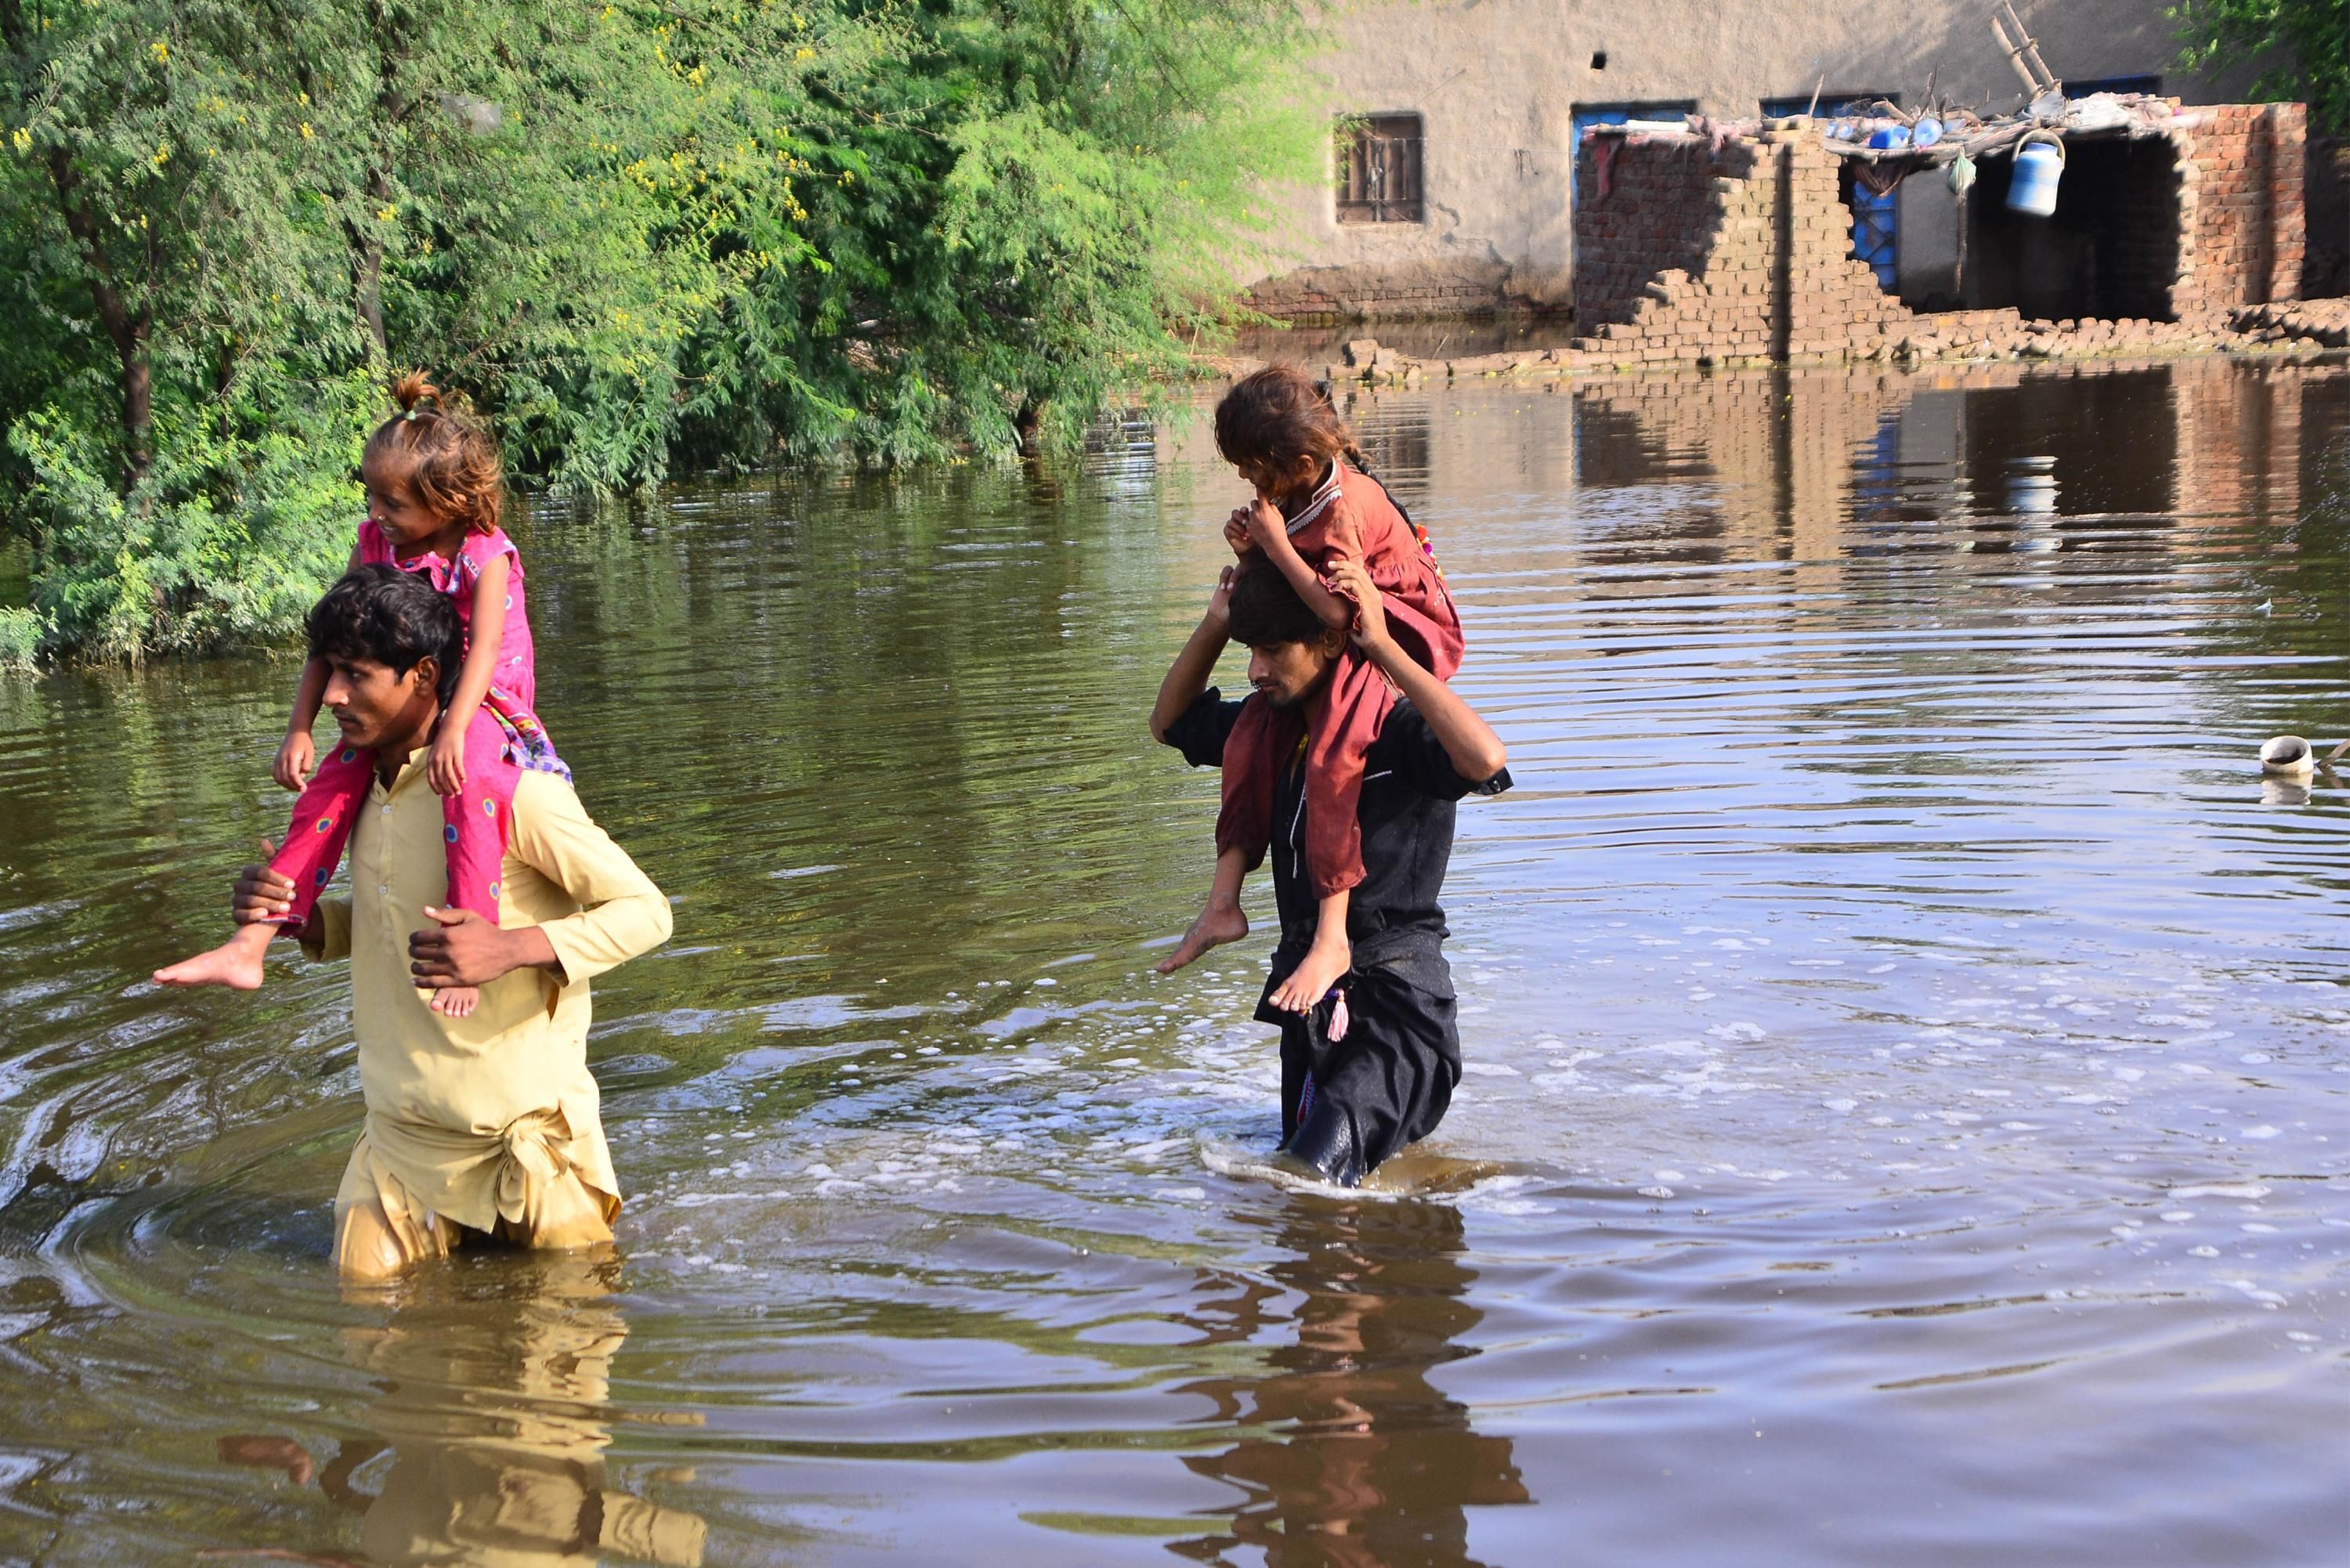 Pakistan flooding victims